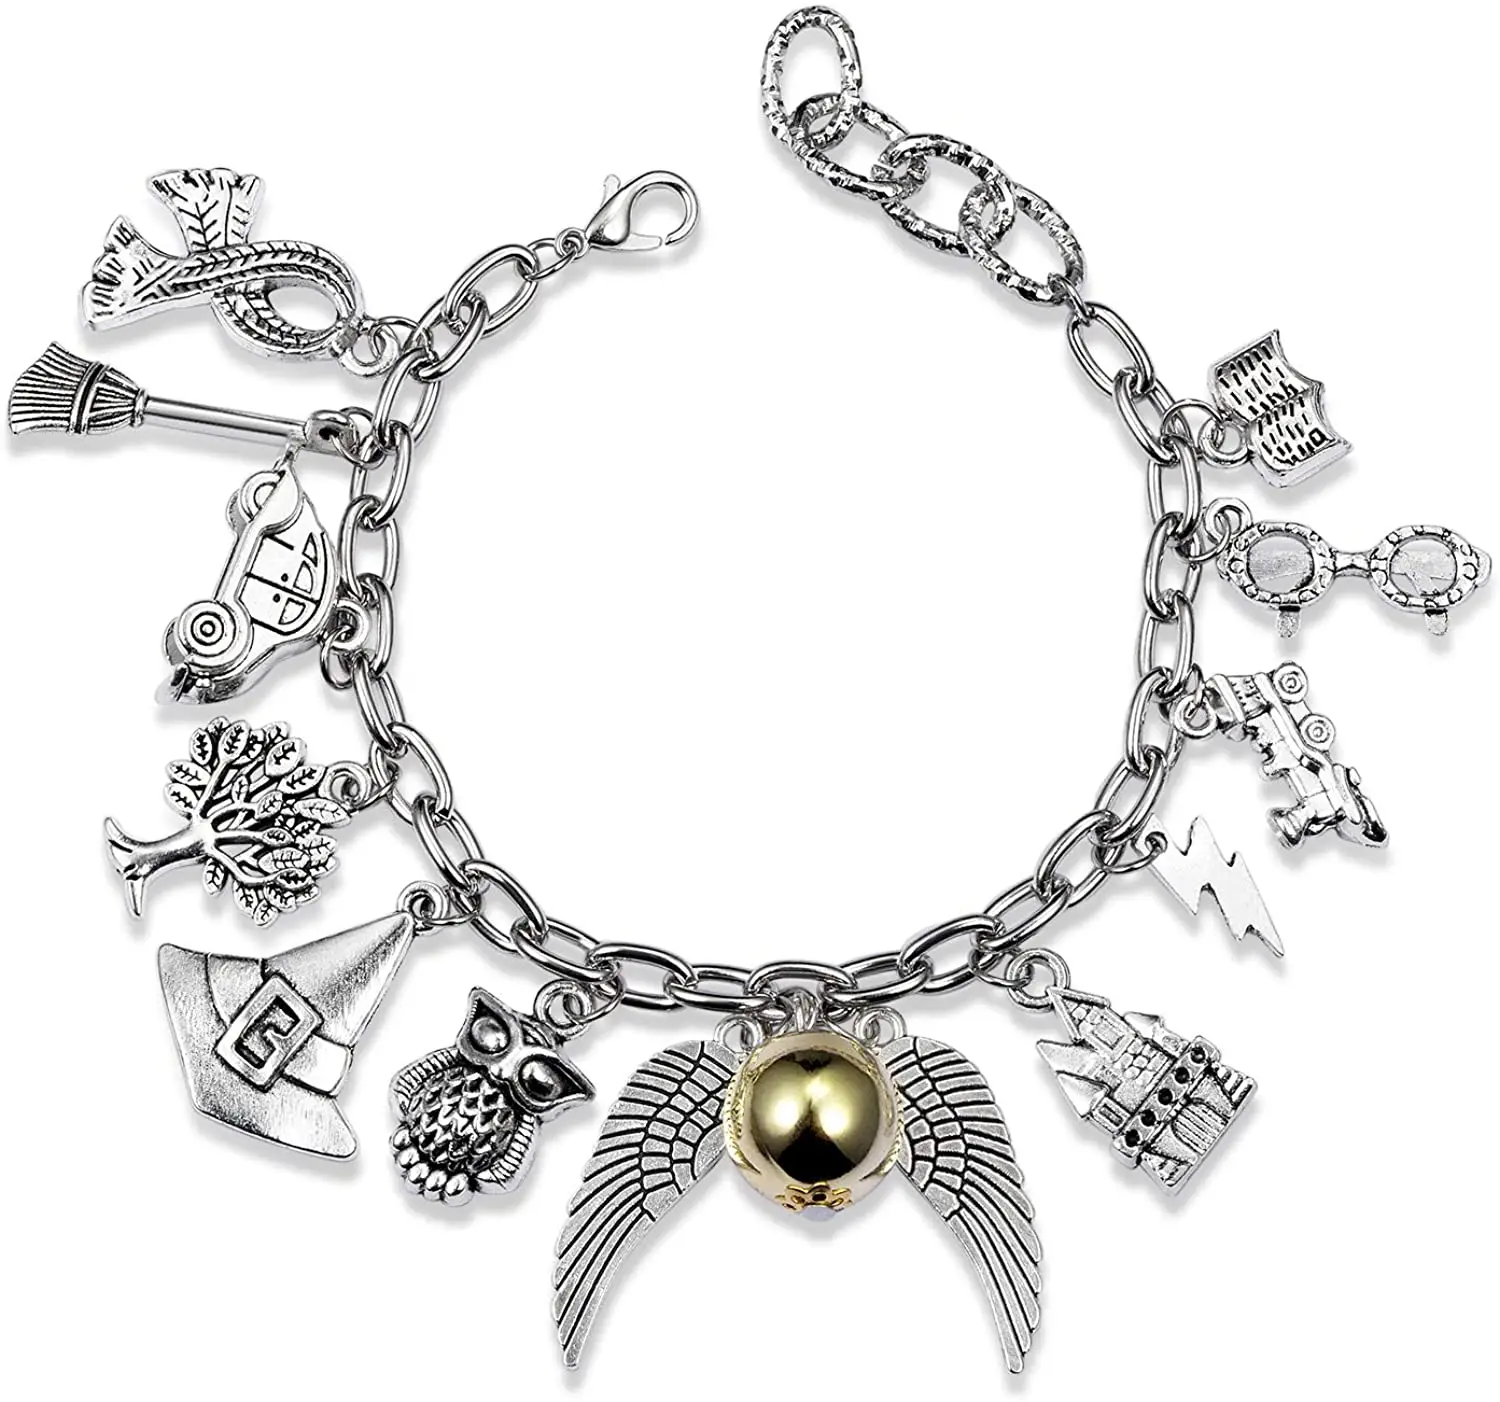 Source Charm Bracelets Themed Friendship Bracelet 8-Inch Adjustable  Birthday Gift For Teens Girls on m.